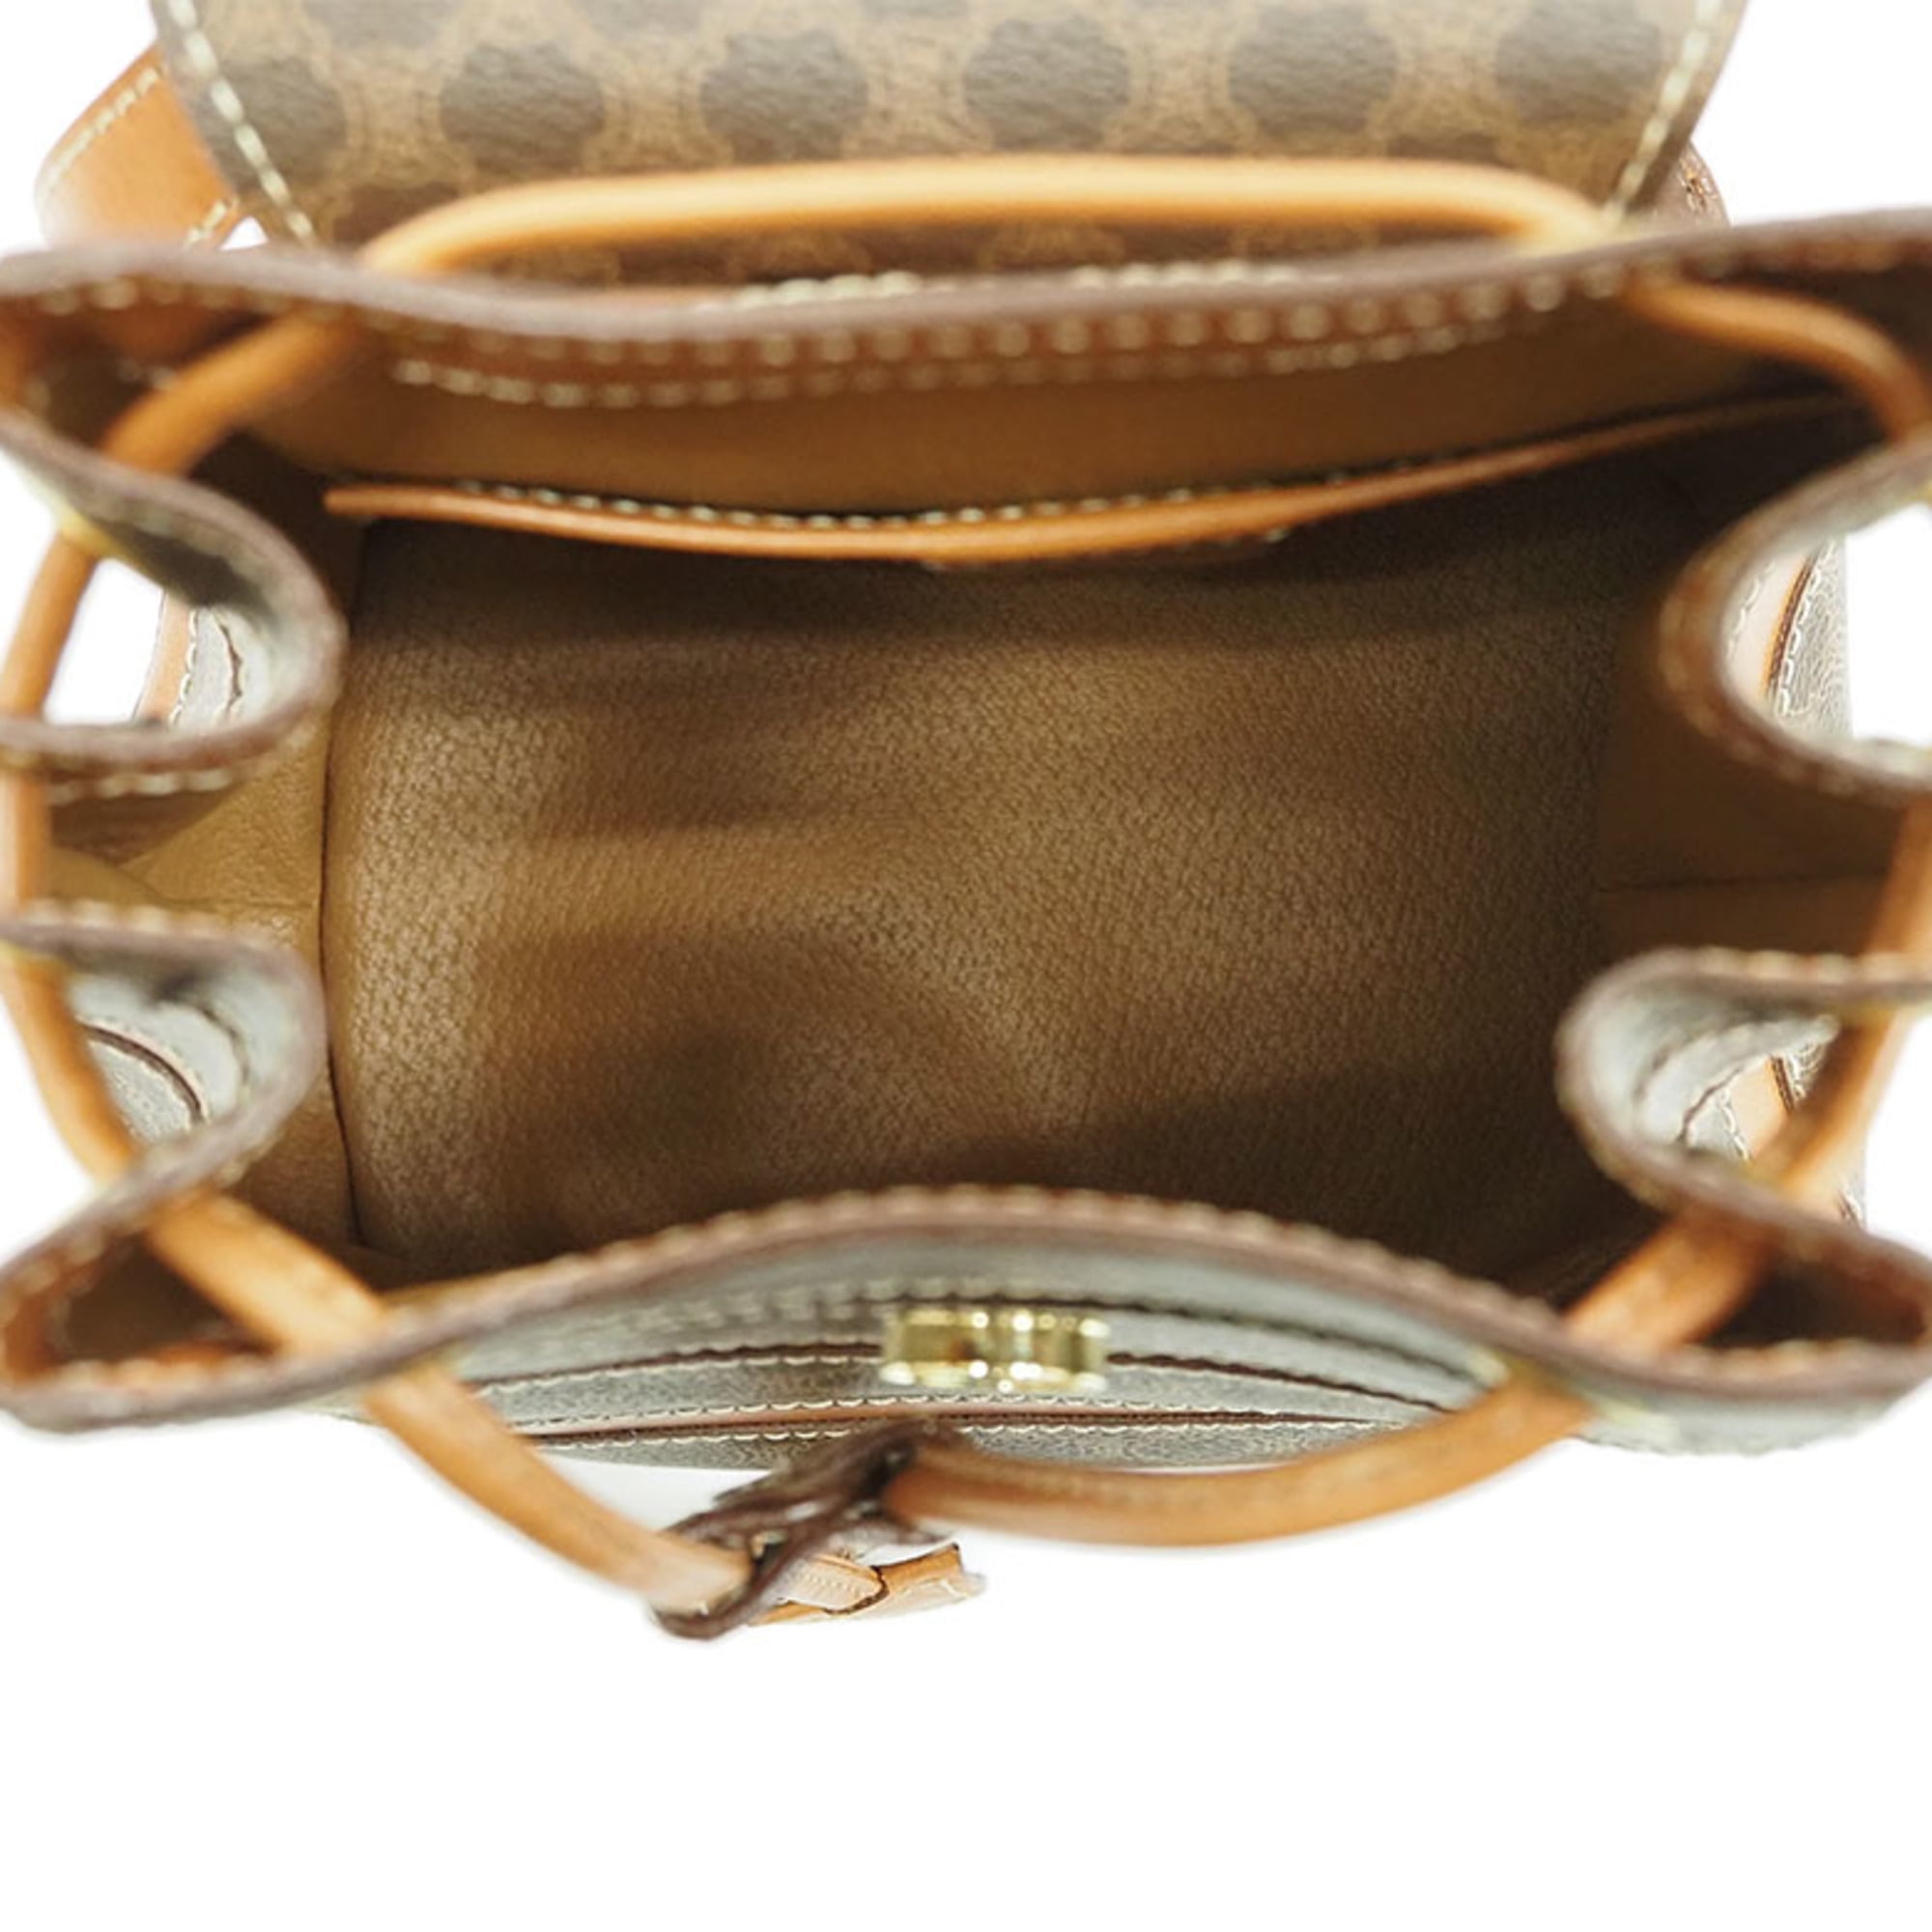 CELINE Macadam Backpack Drawstring Bag Brown PVC Leather Logo Stripes Italy  M96